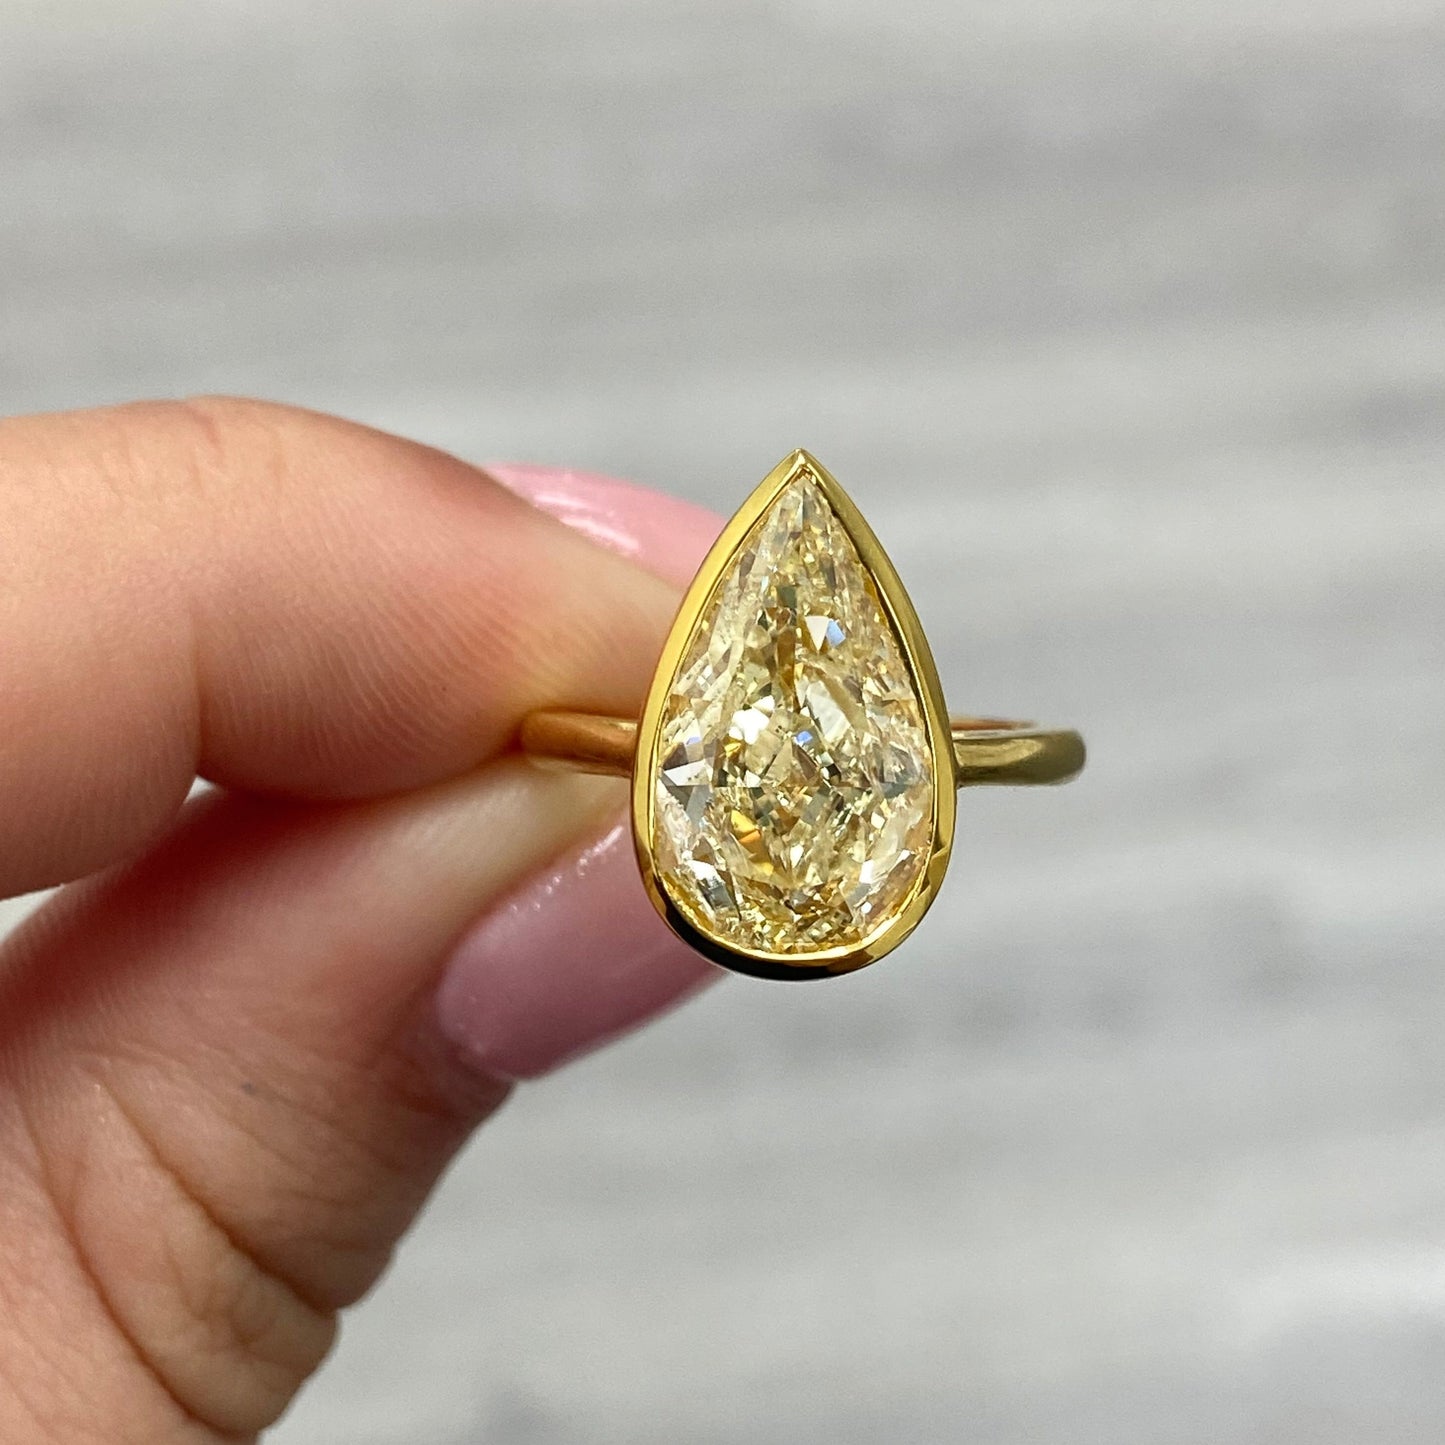 Bezel set diamond ring. Bezel engagement ring. 5 carat ring. Pear shape diamond ring